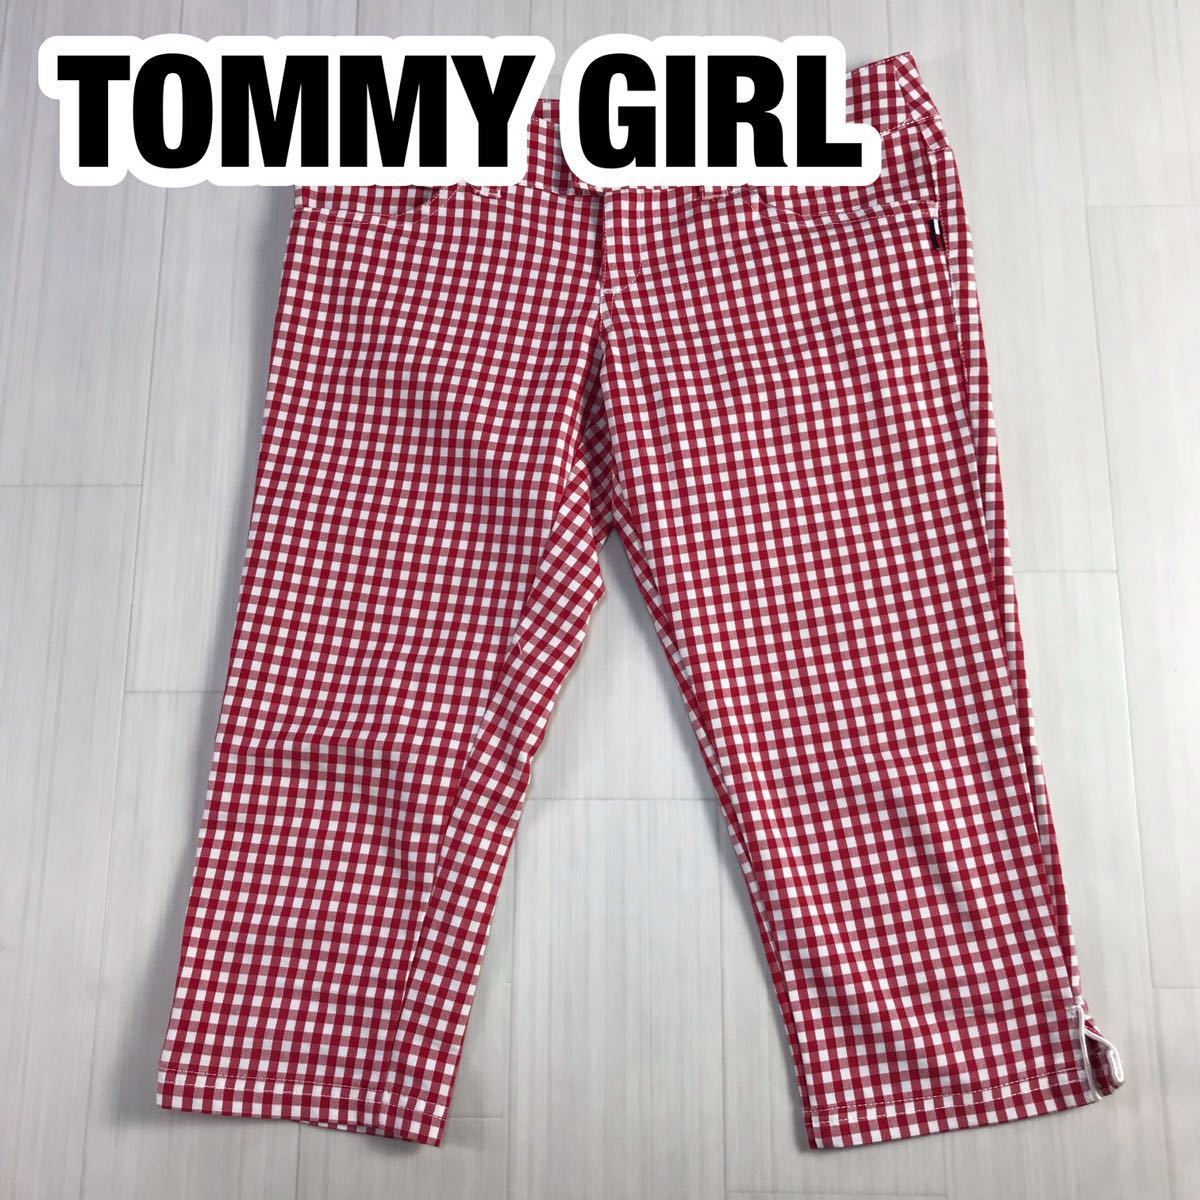 TOMMY GIRL トミーガール パンツ S レッド ホワイト チェック柄_画像1